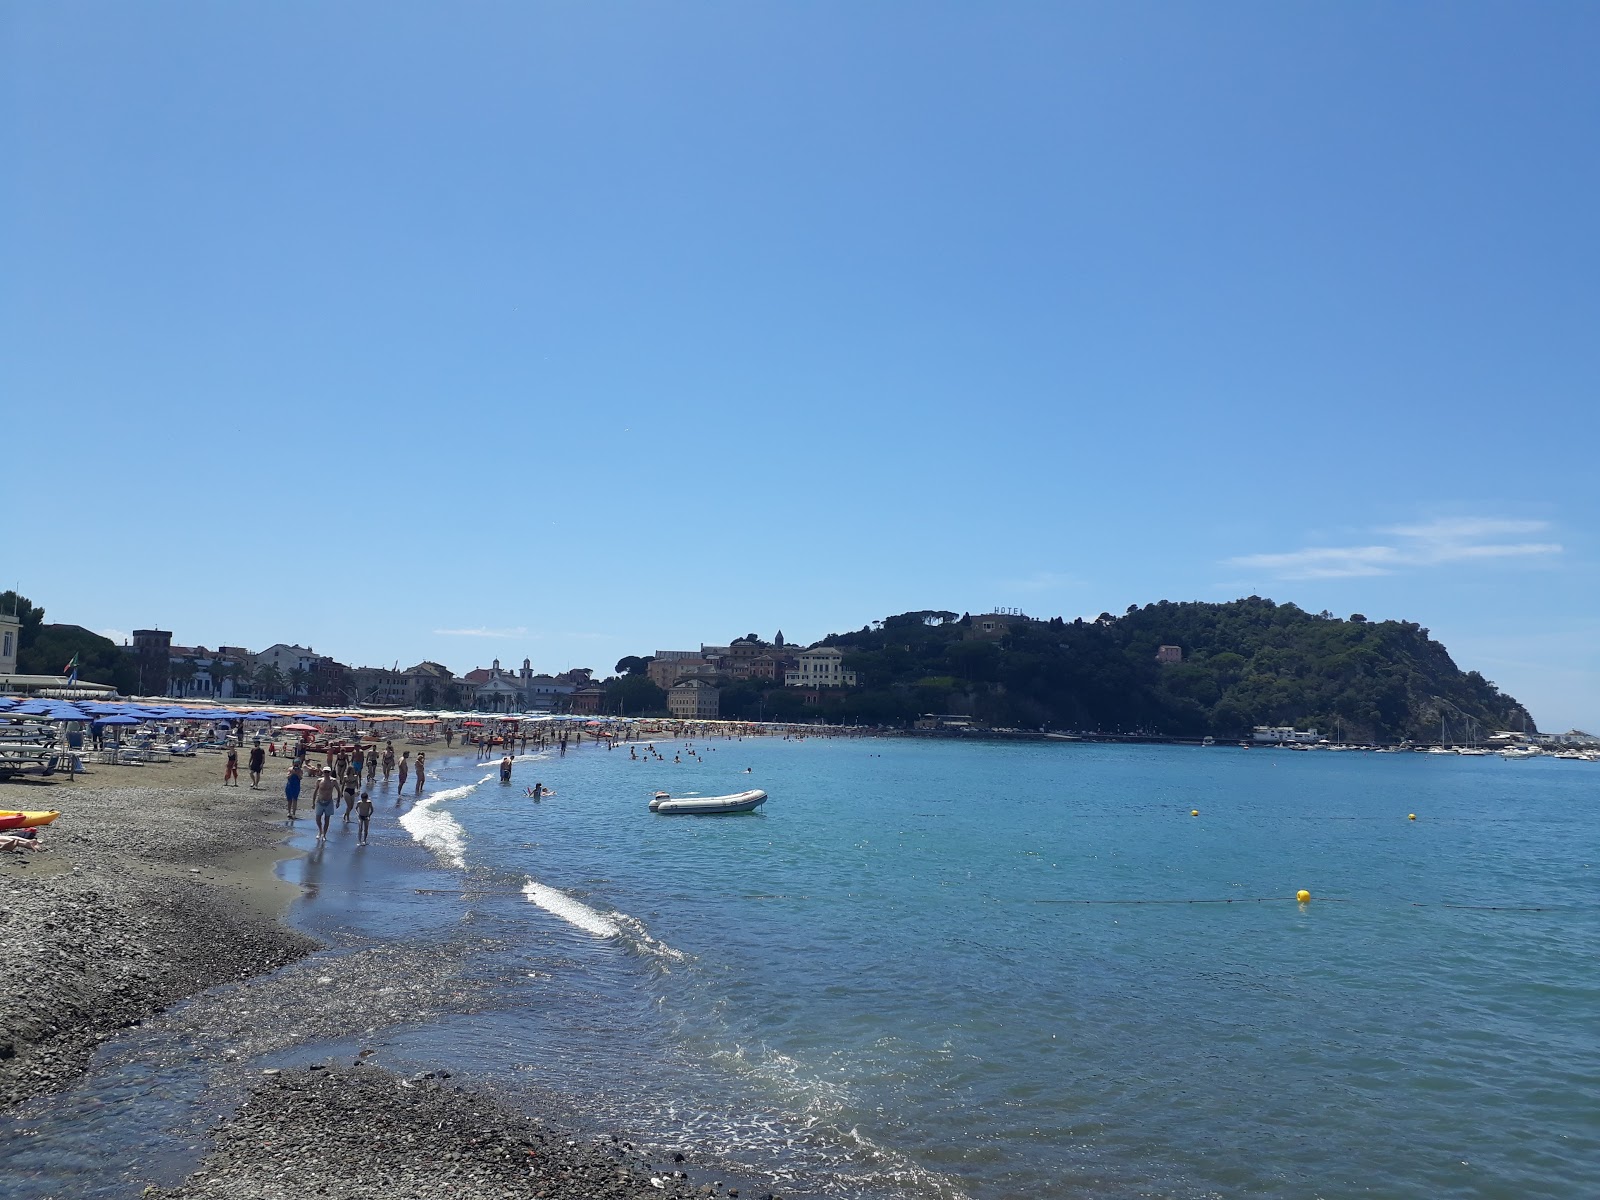 Fotografie cu Spiaggia per cani - locul popular printre cunoscătorii de relaxare